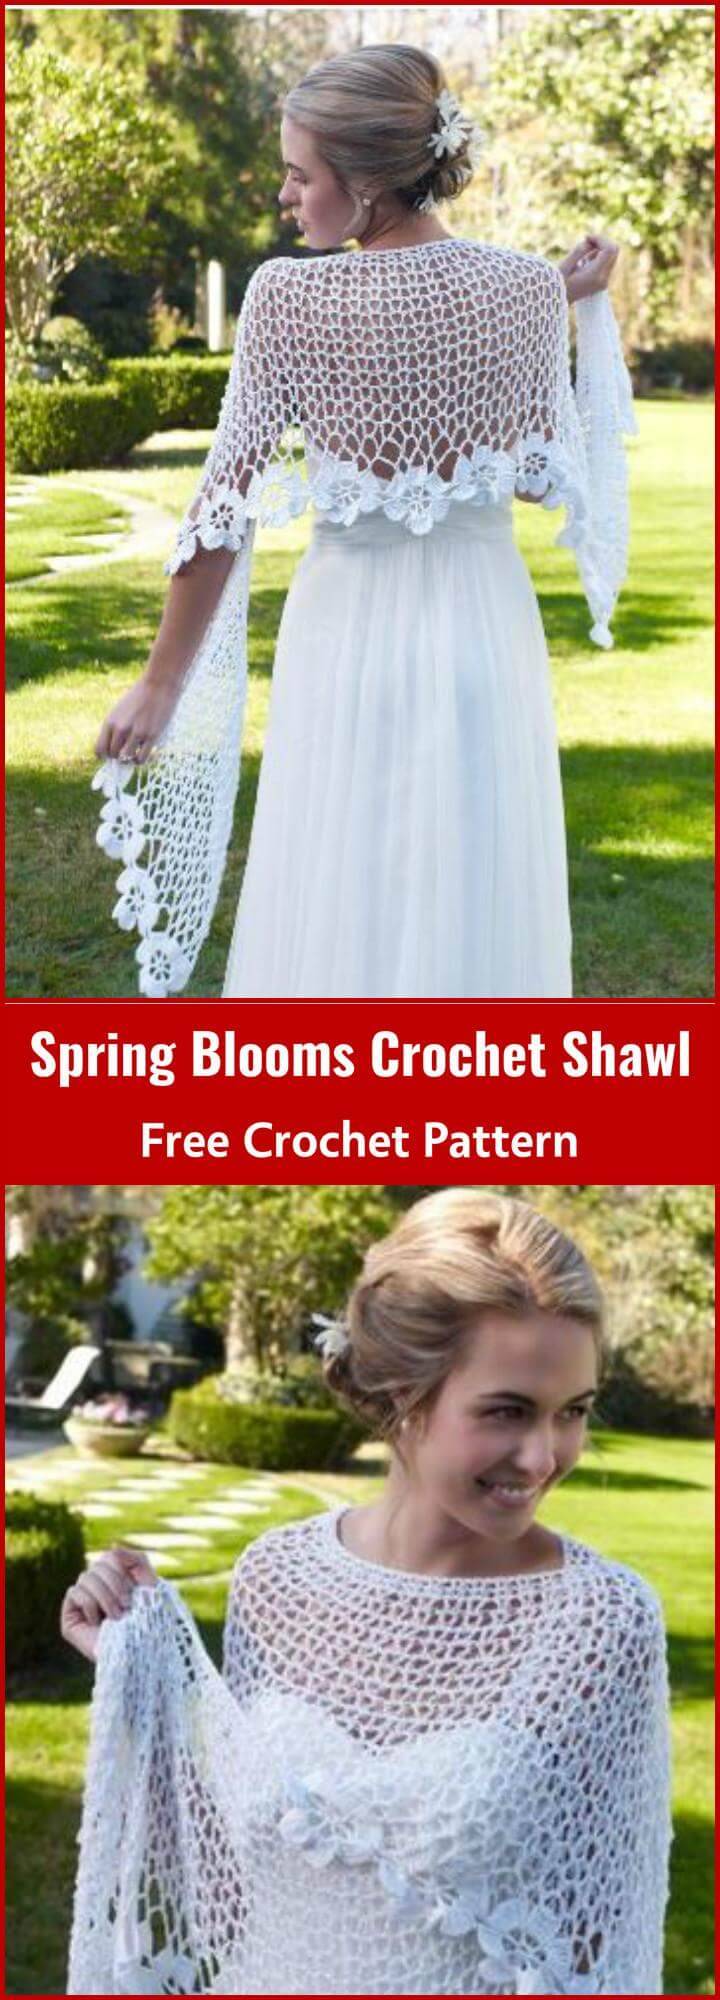 Spring Blooms Crochet Shawl Free Crochet Pattern